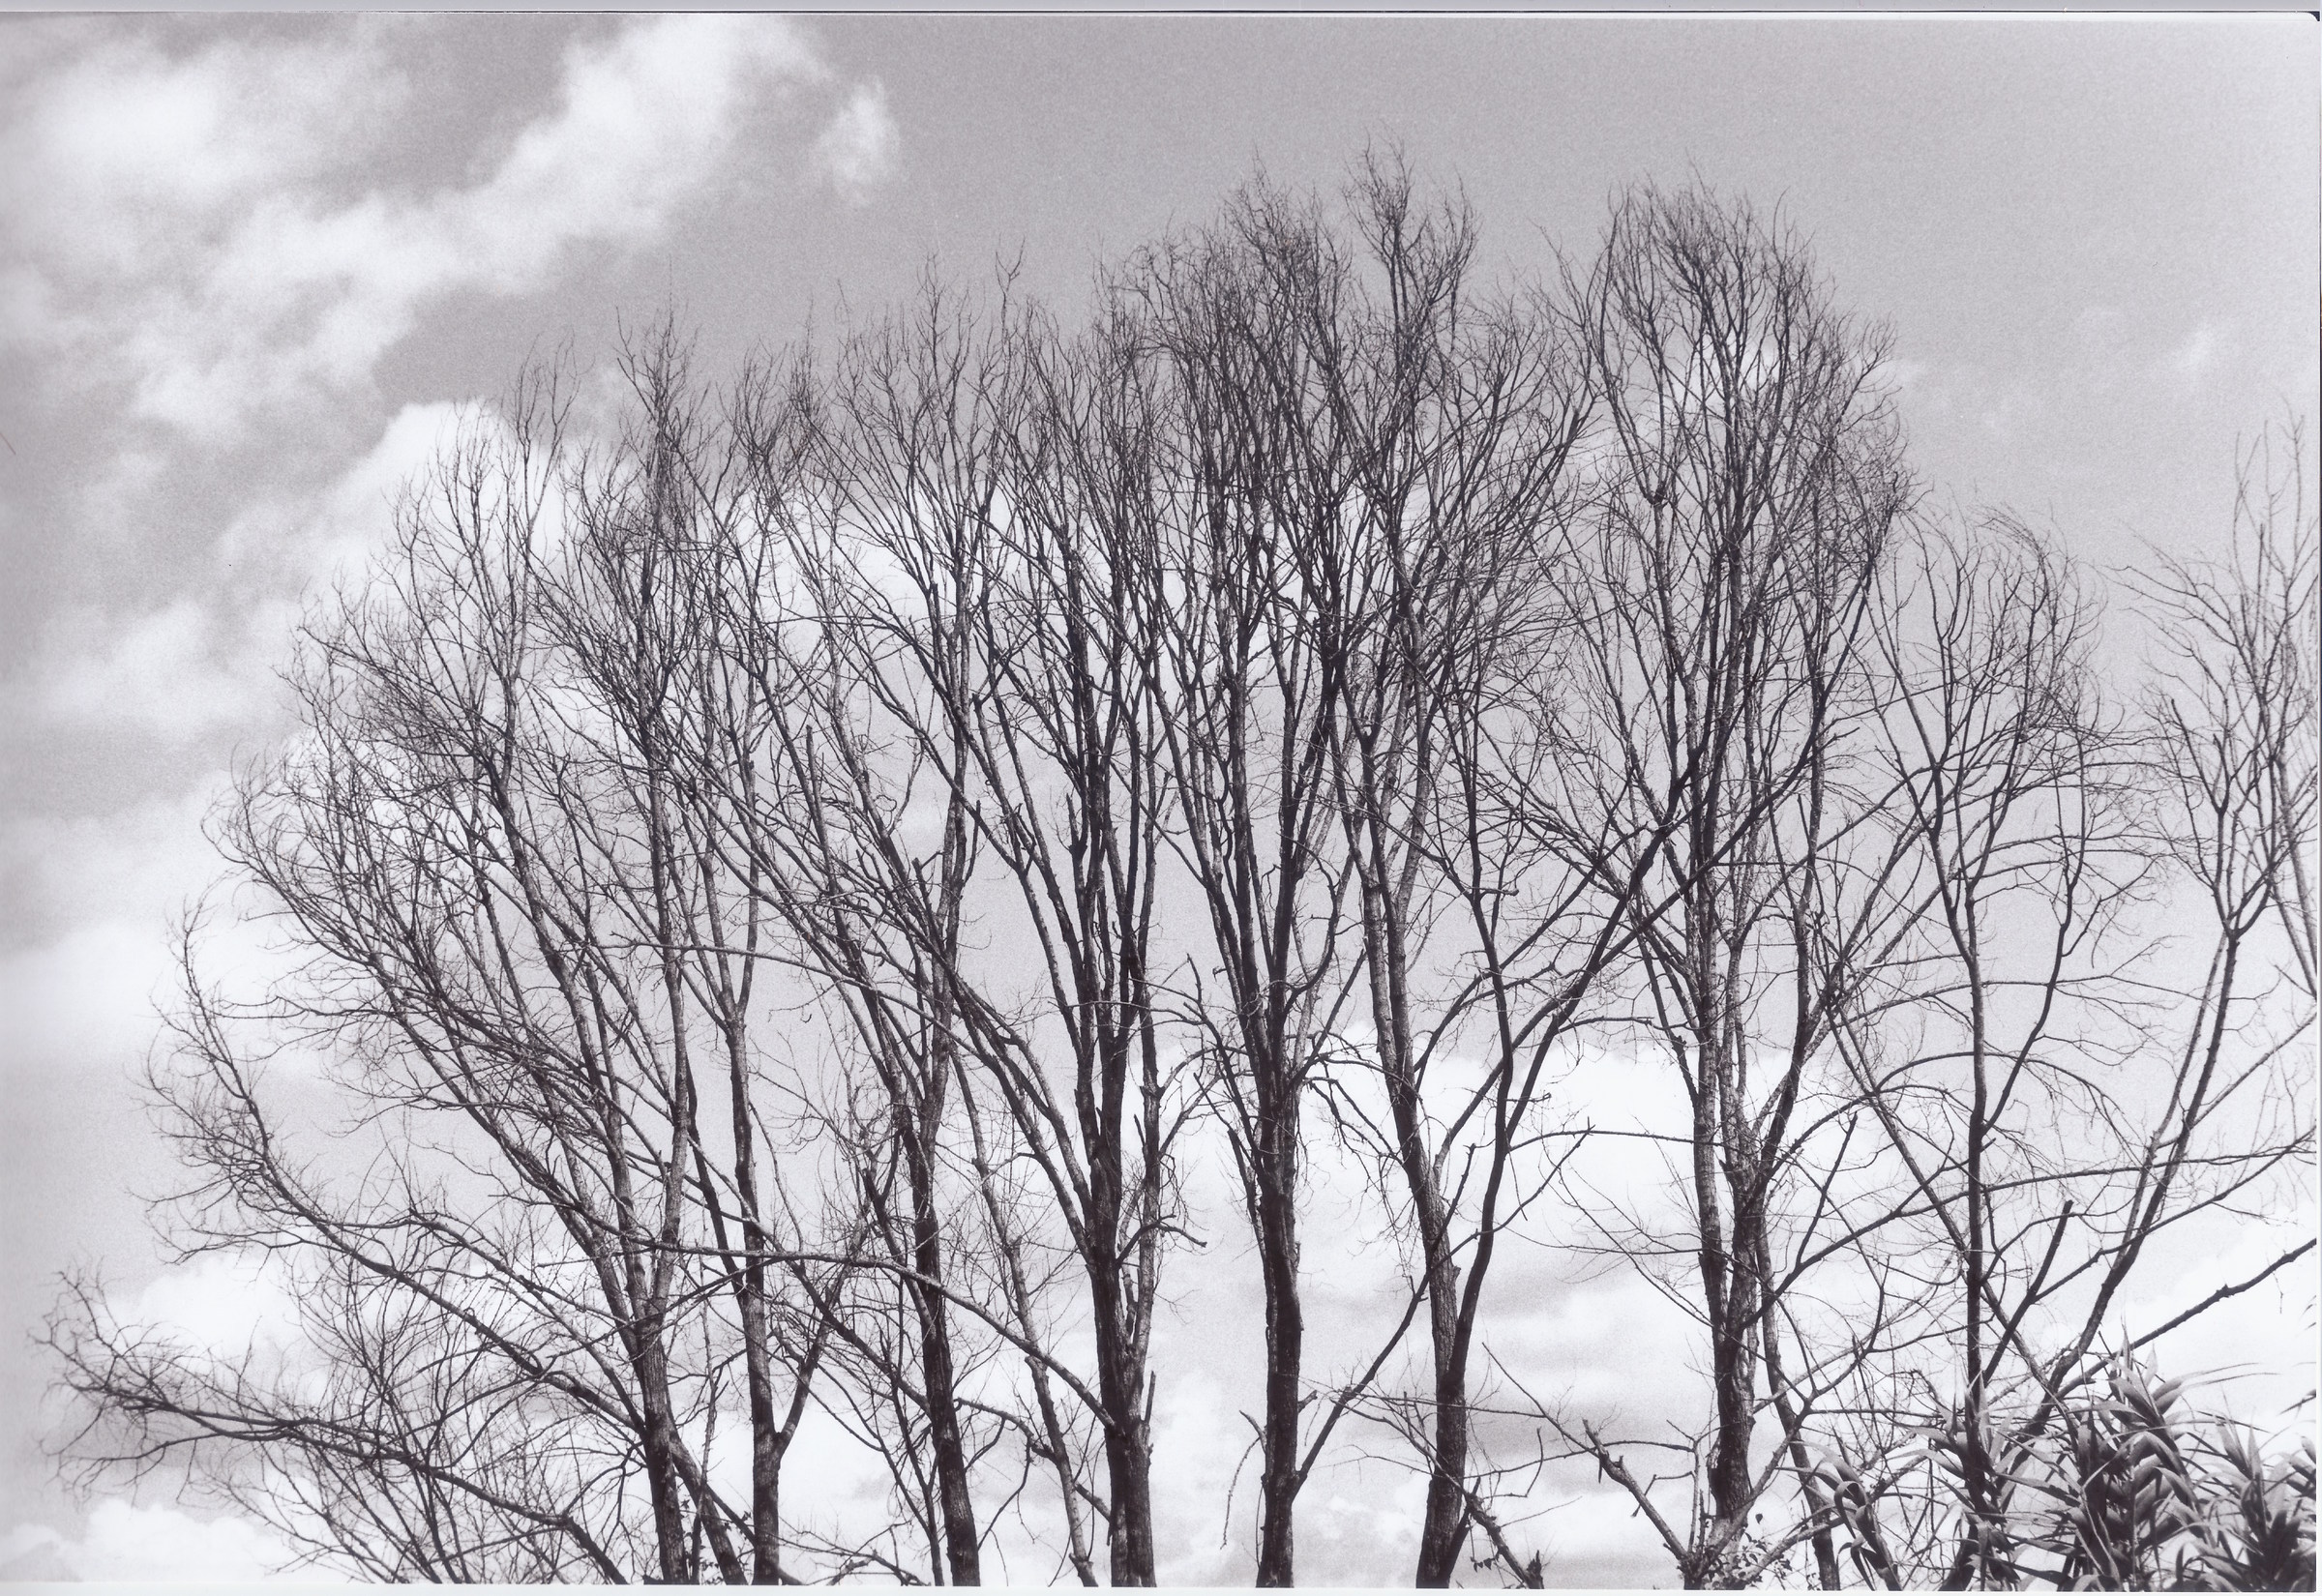 Branches in the Sky (35mm film Ilford Delta 100)...